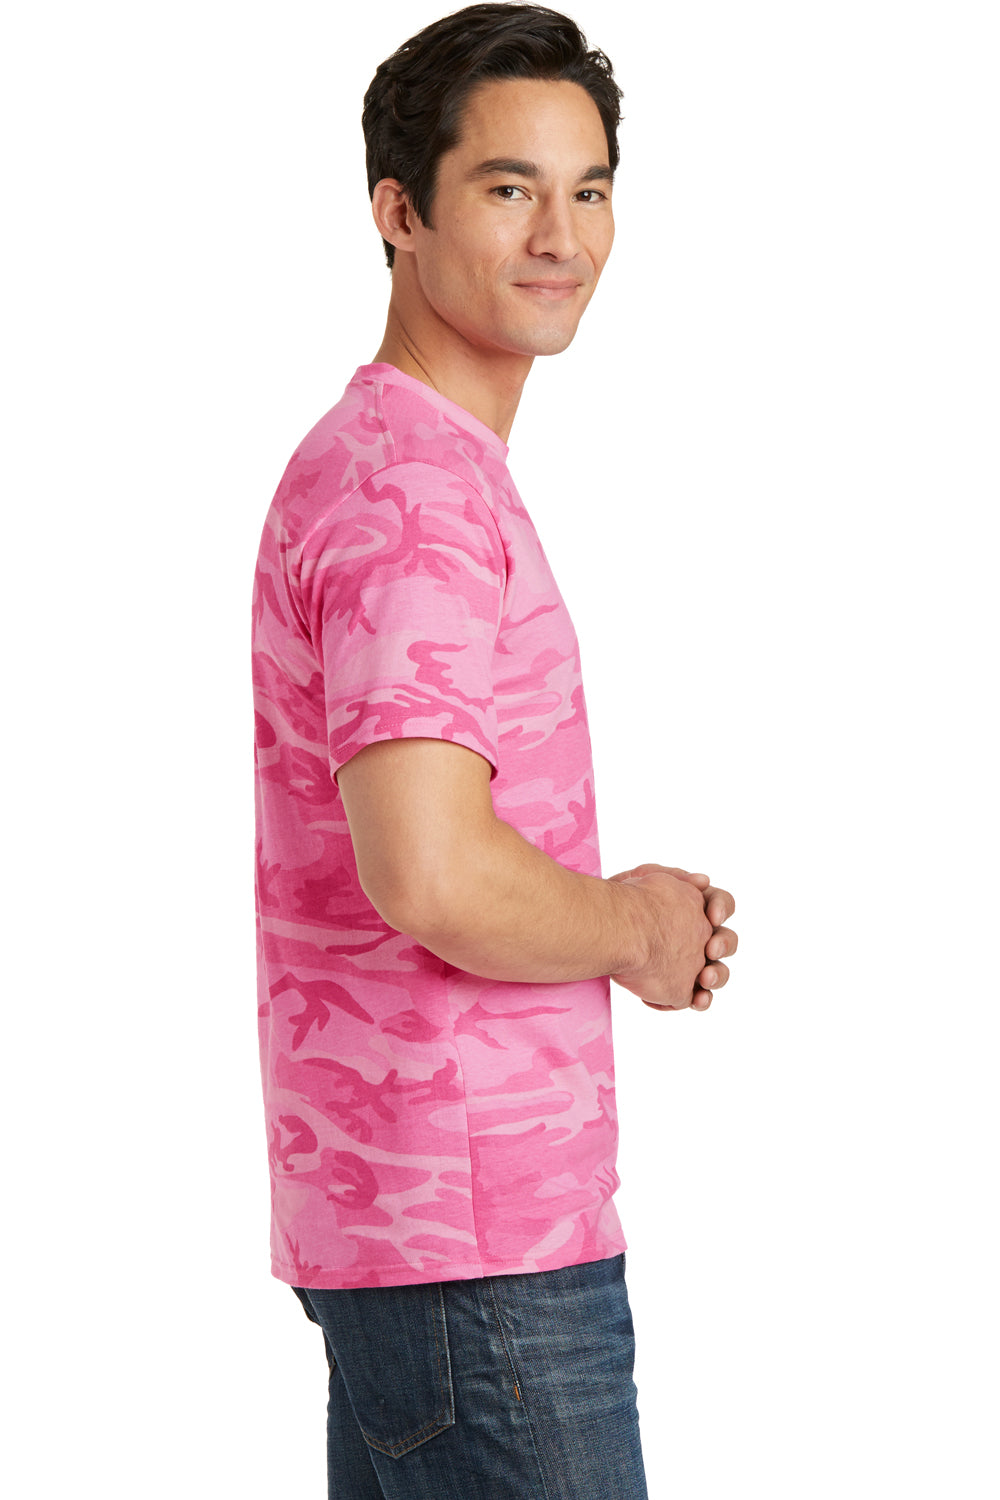 Port & Company PC54C Mens Core Short Sleeve Crewneck T-Shirt Pink Camo Side